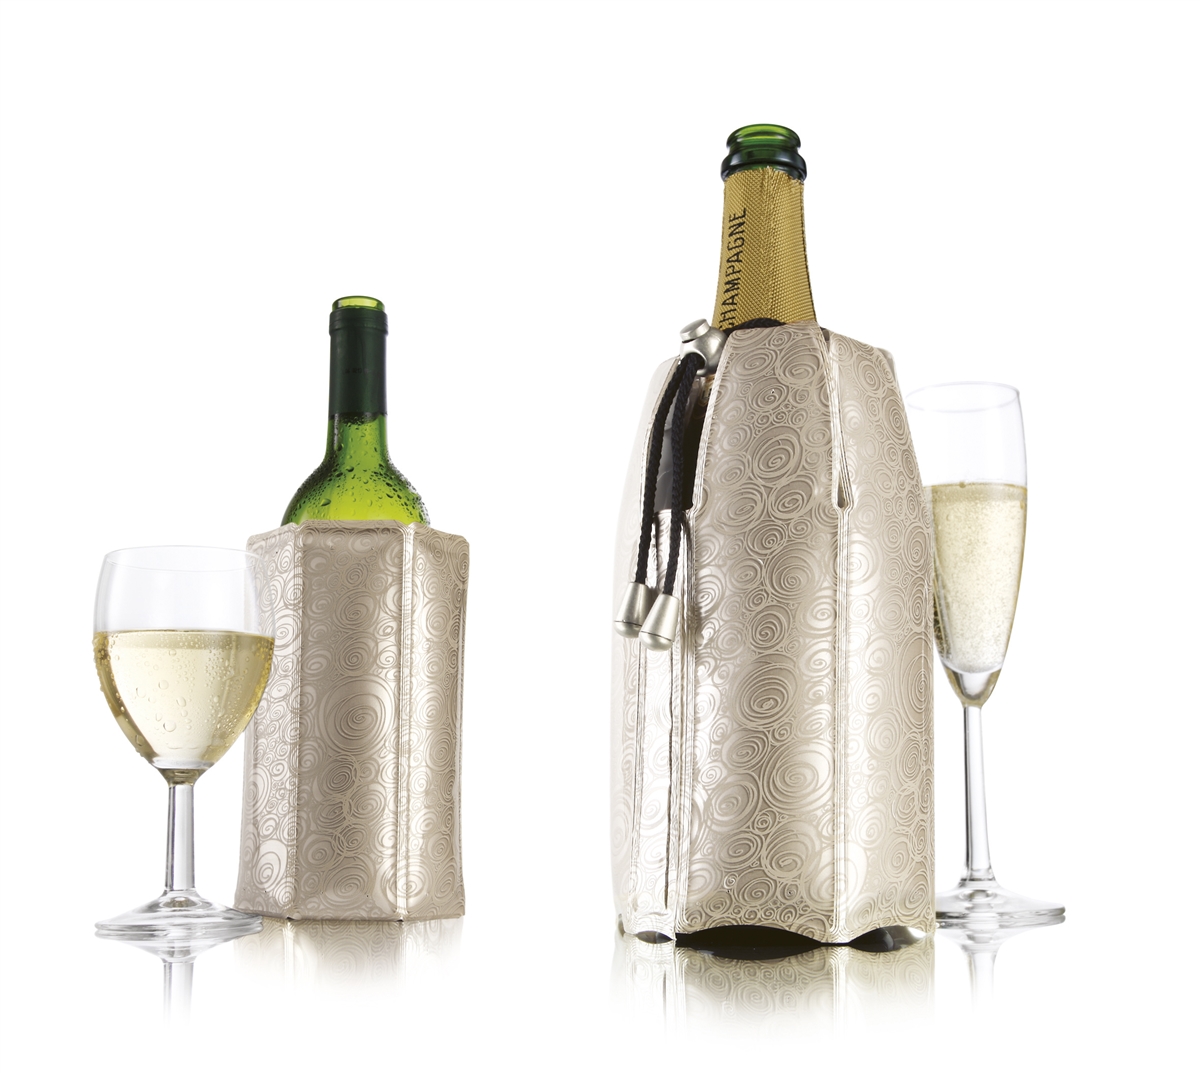 Vacu Vin Active Wine Cooler in Platinum